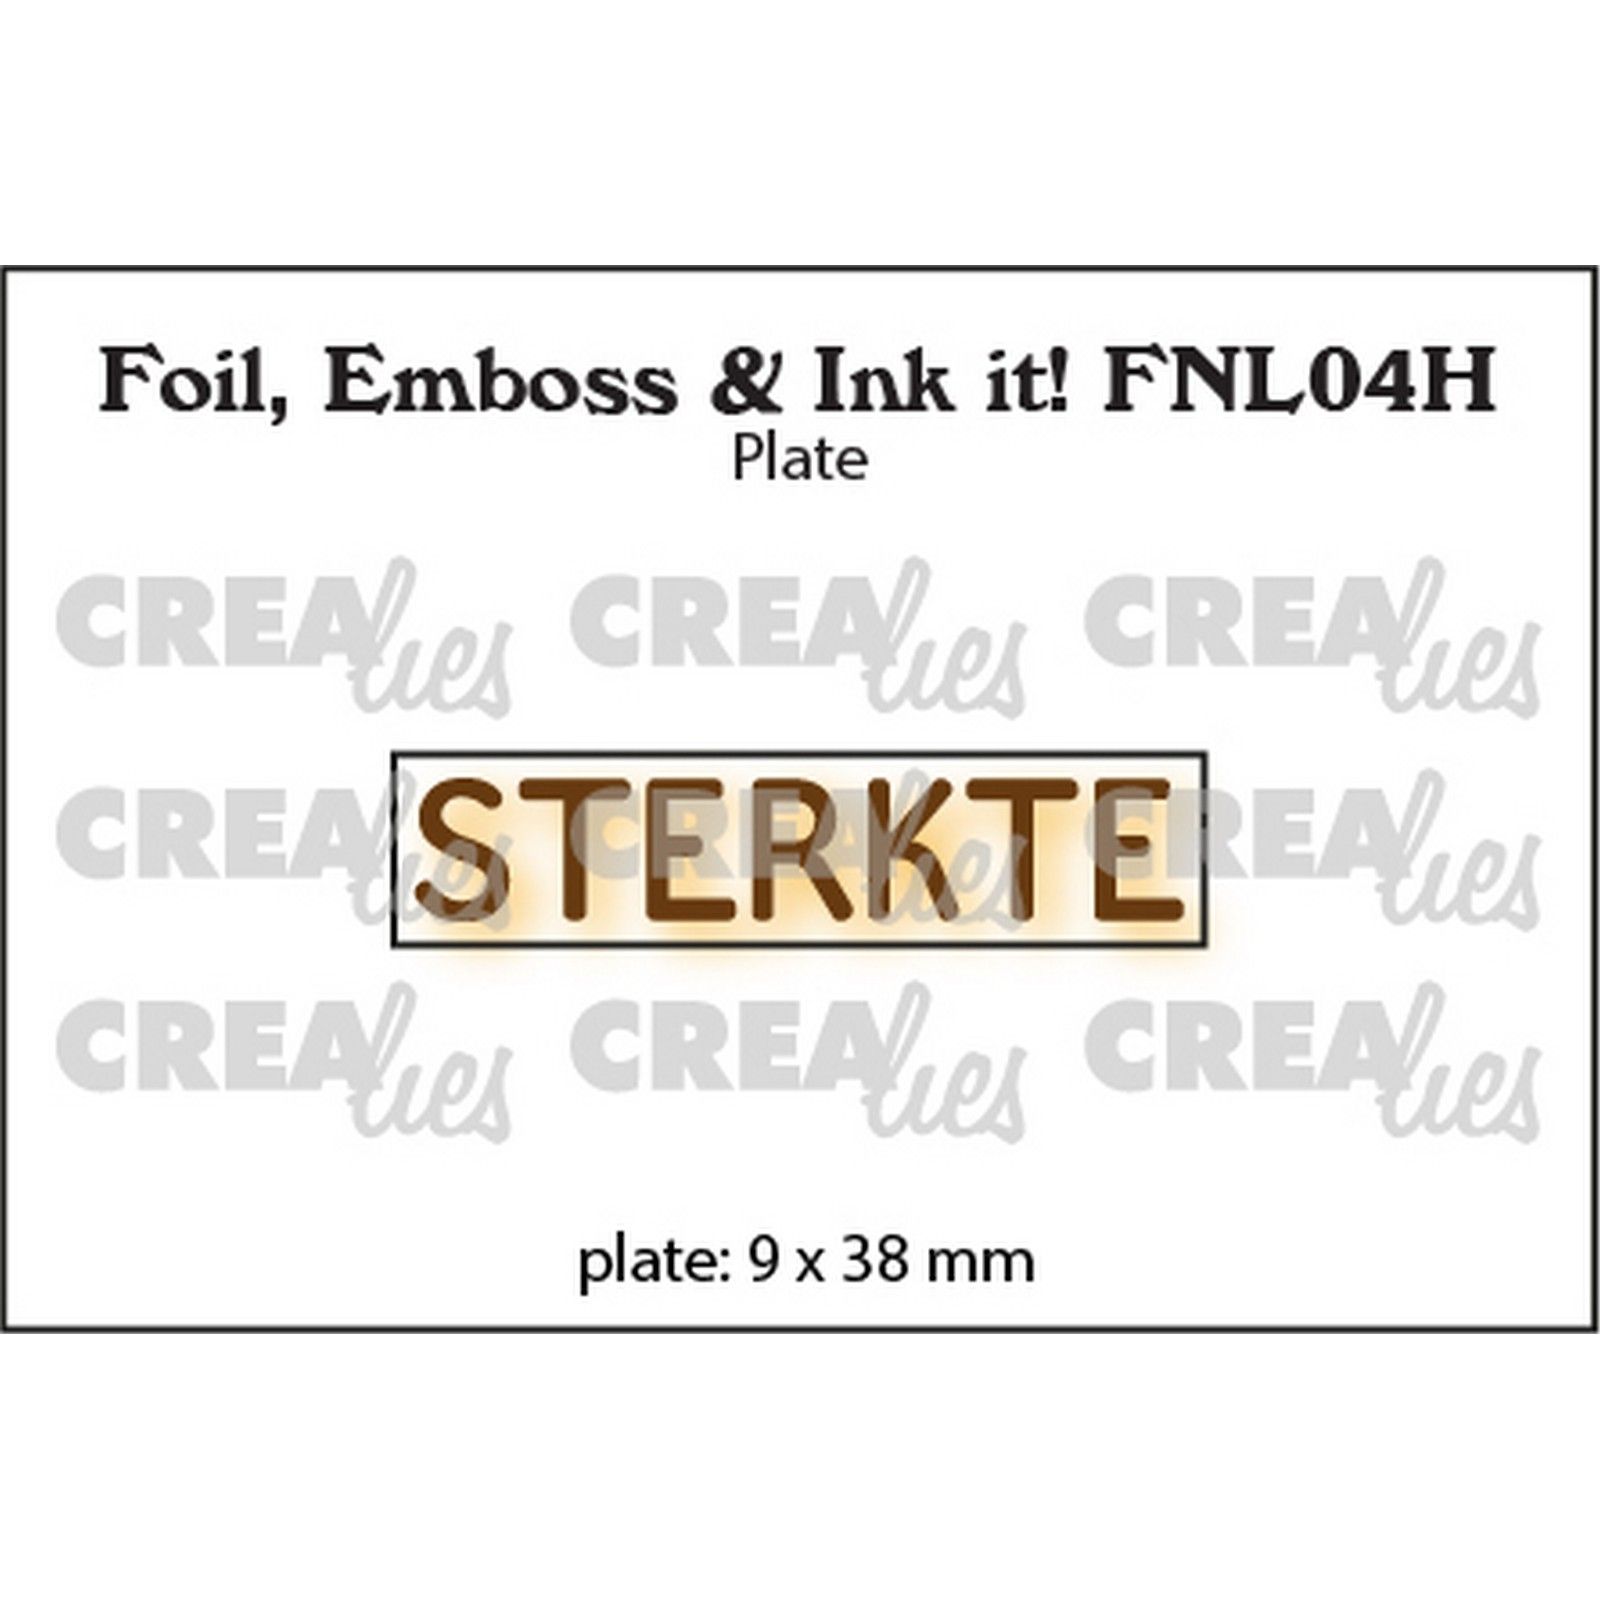 Crealies • Foil, Emboss & Ink it! STERKTE